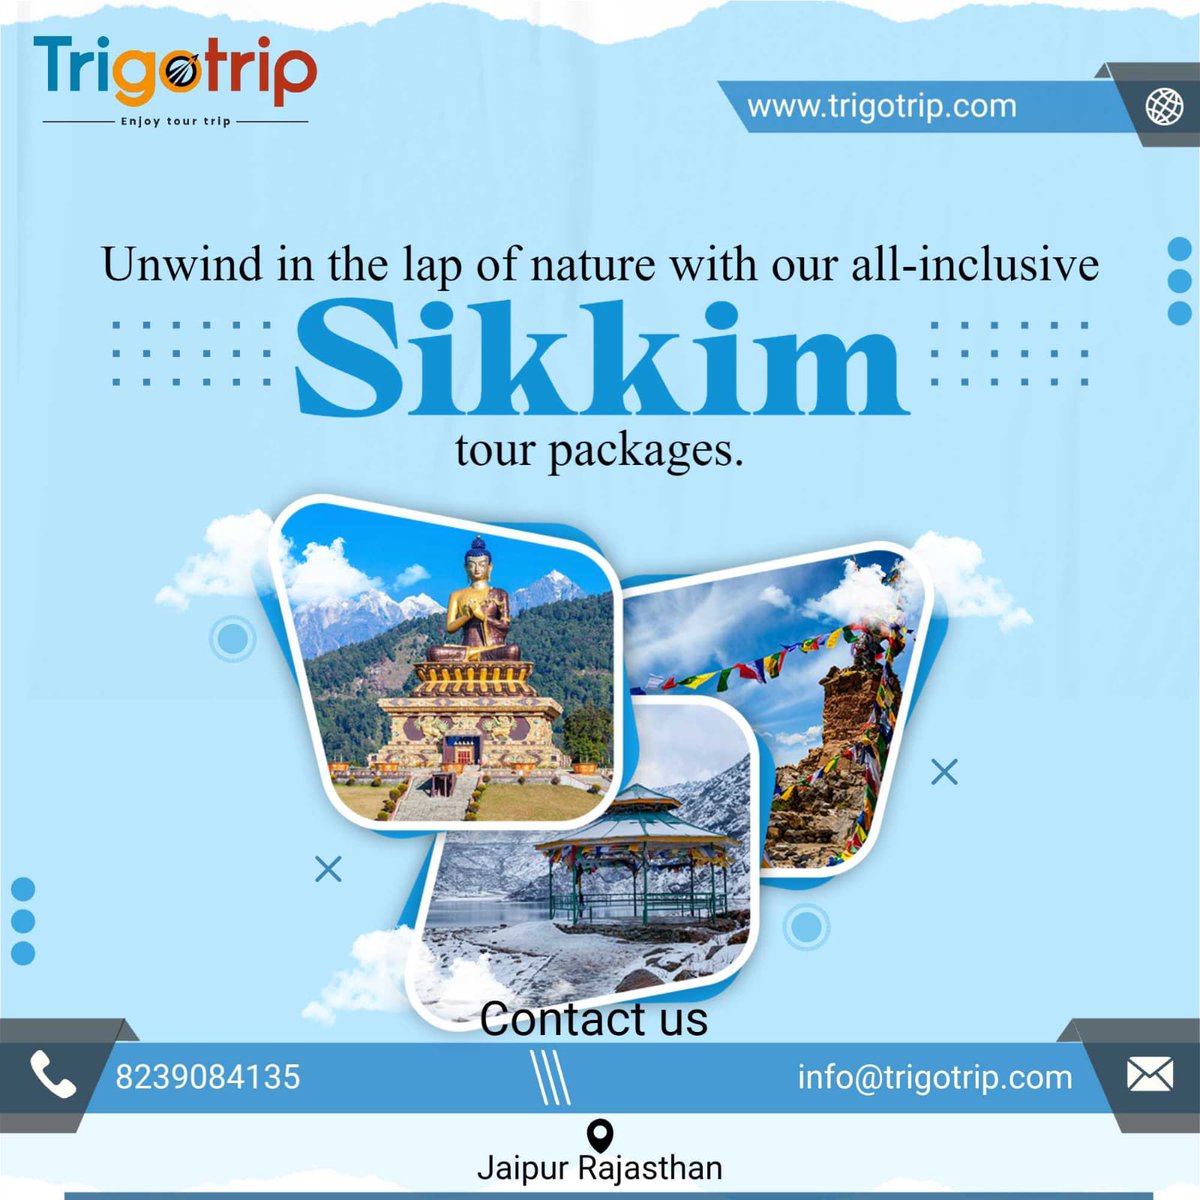 Book Your Sikkim Tour Through Trigotrip at the best summer vacation rates available
.
#northeastindia #nature #travel #vacation #holiday #trigotrip #grouptours #sikkimtours #dekhoapnadesh #sikkimtourpackage #northeastfood #GangtokTour #darjeelingtour #gangtoksikkim #kalimpongtour